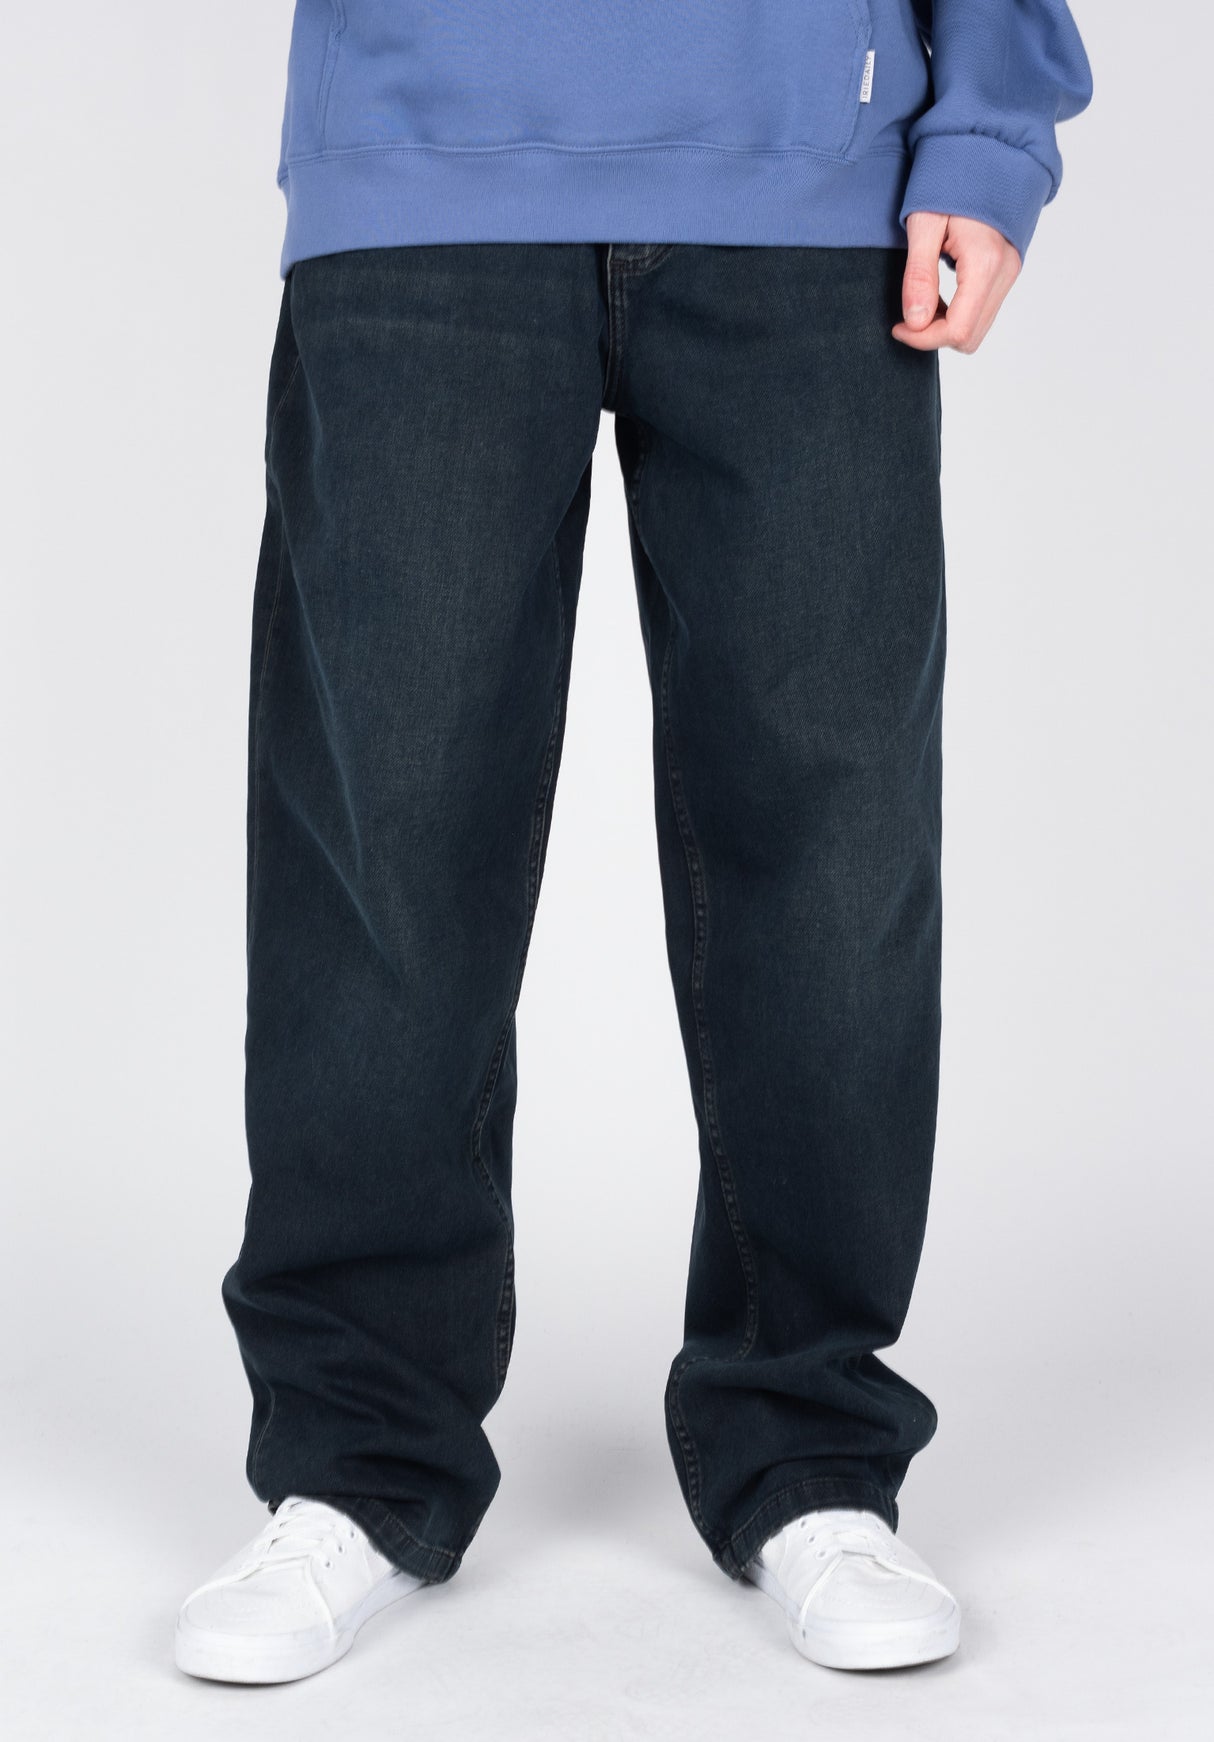 Baggy Reell Jeans in blackwash for Men – TITUS